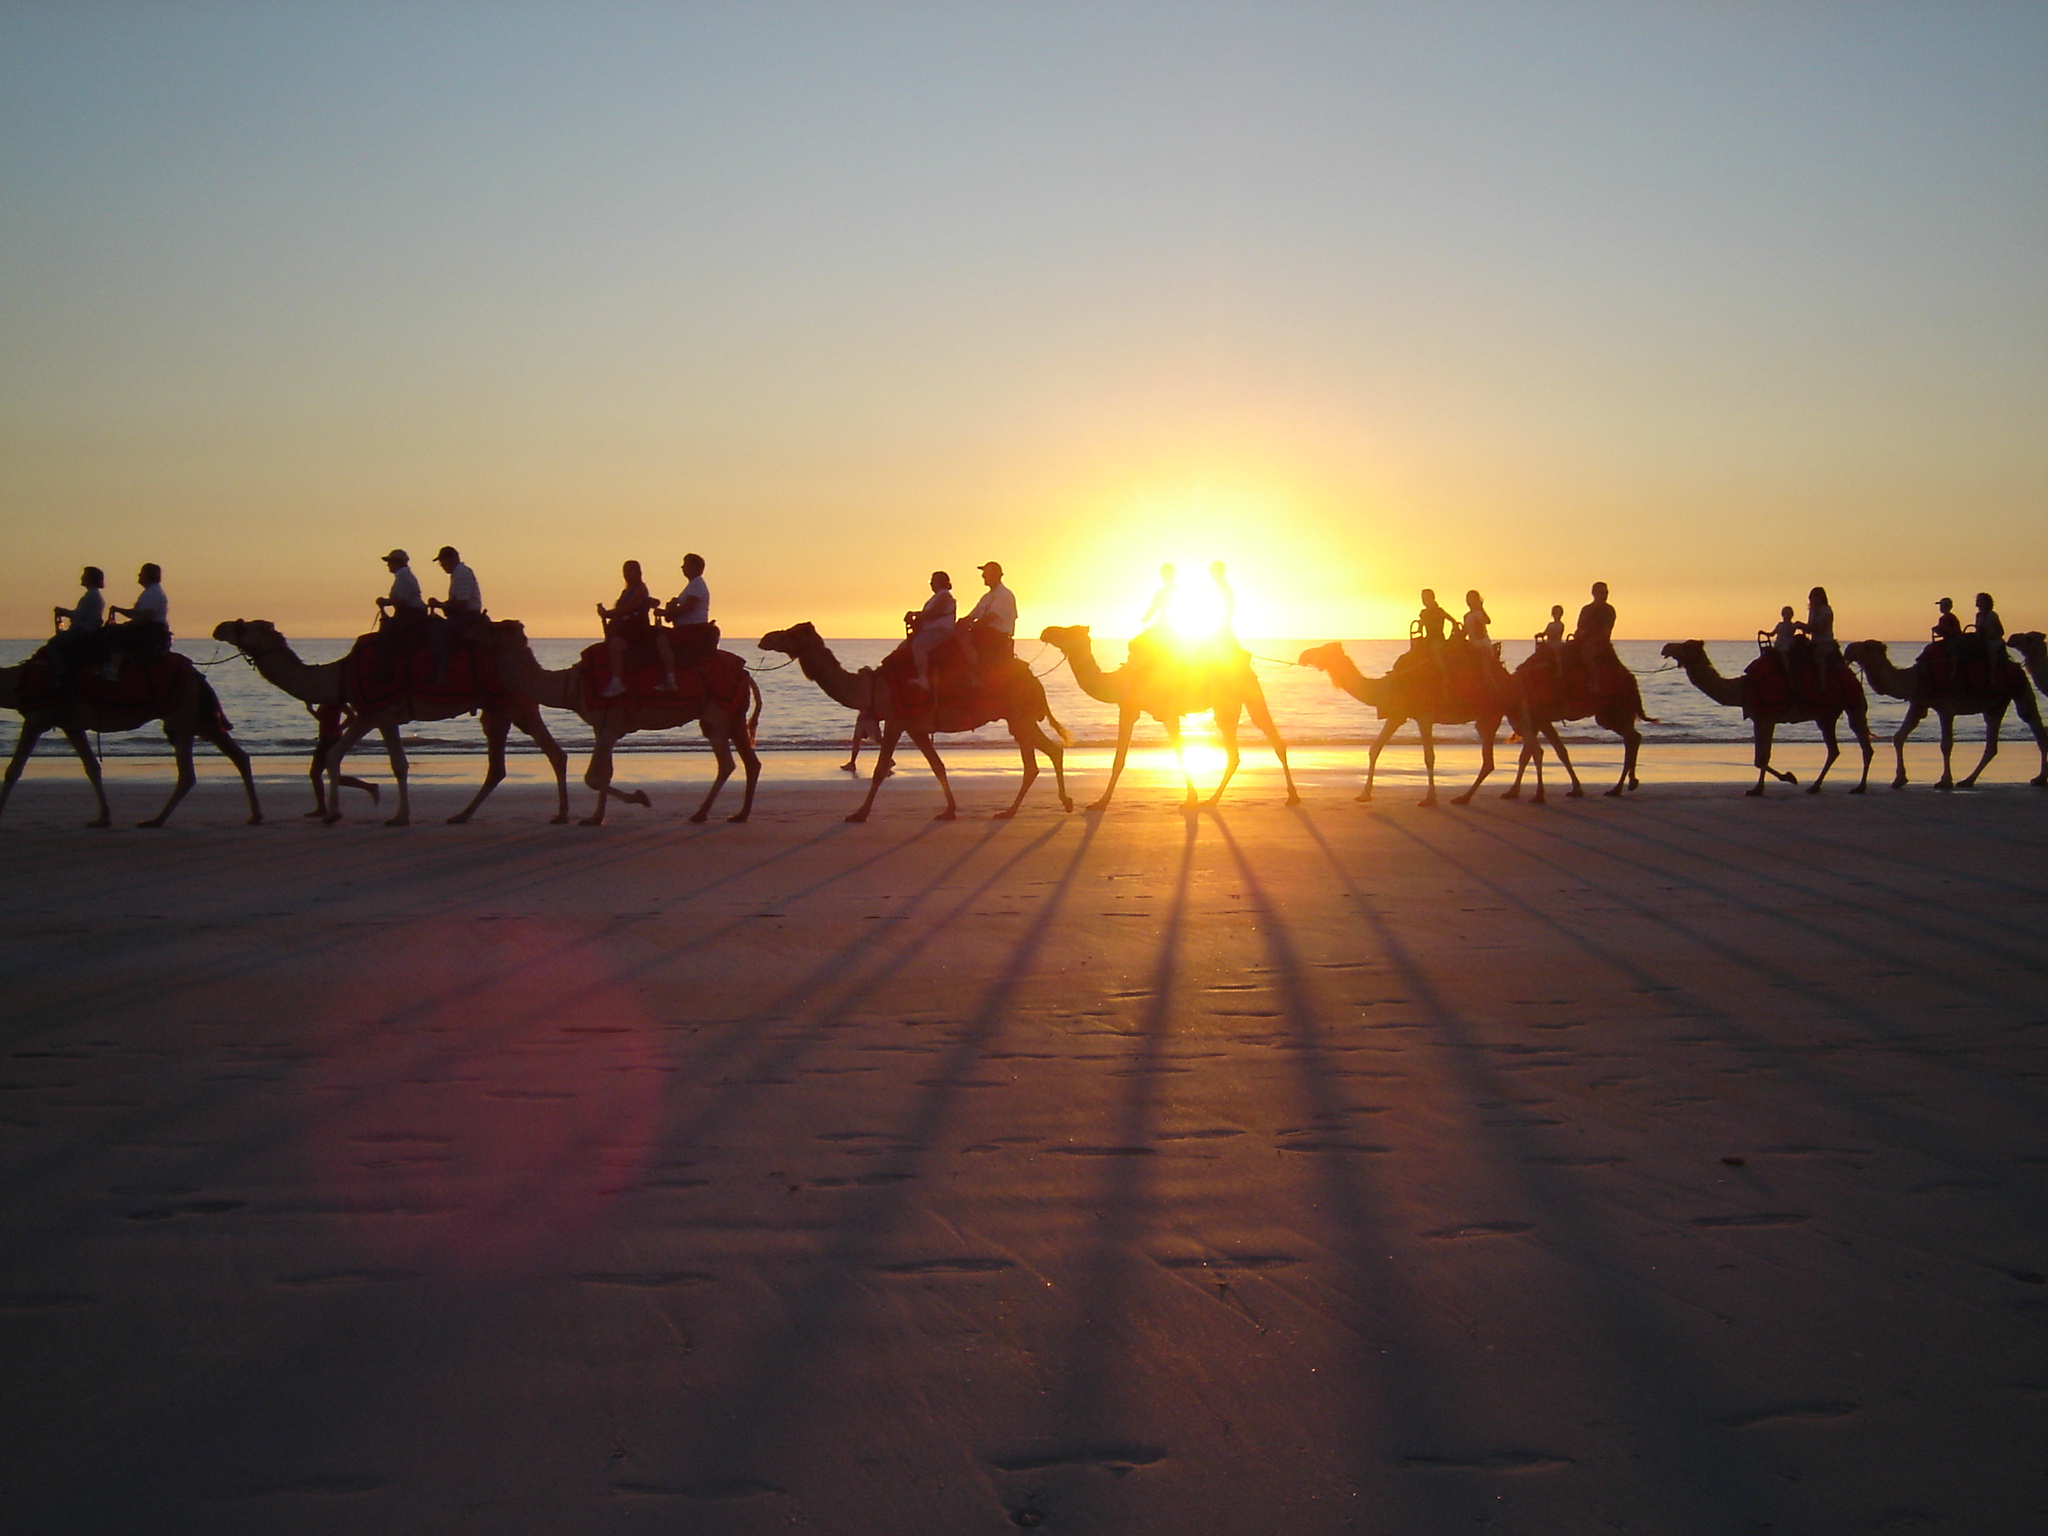 camels walking along a beach at sunset